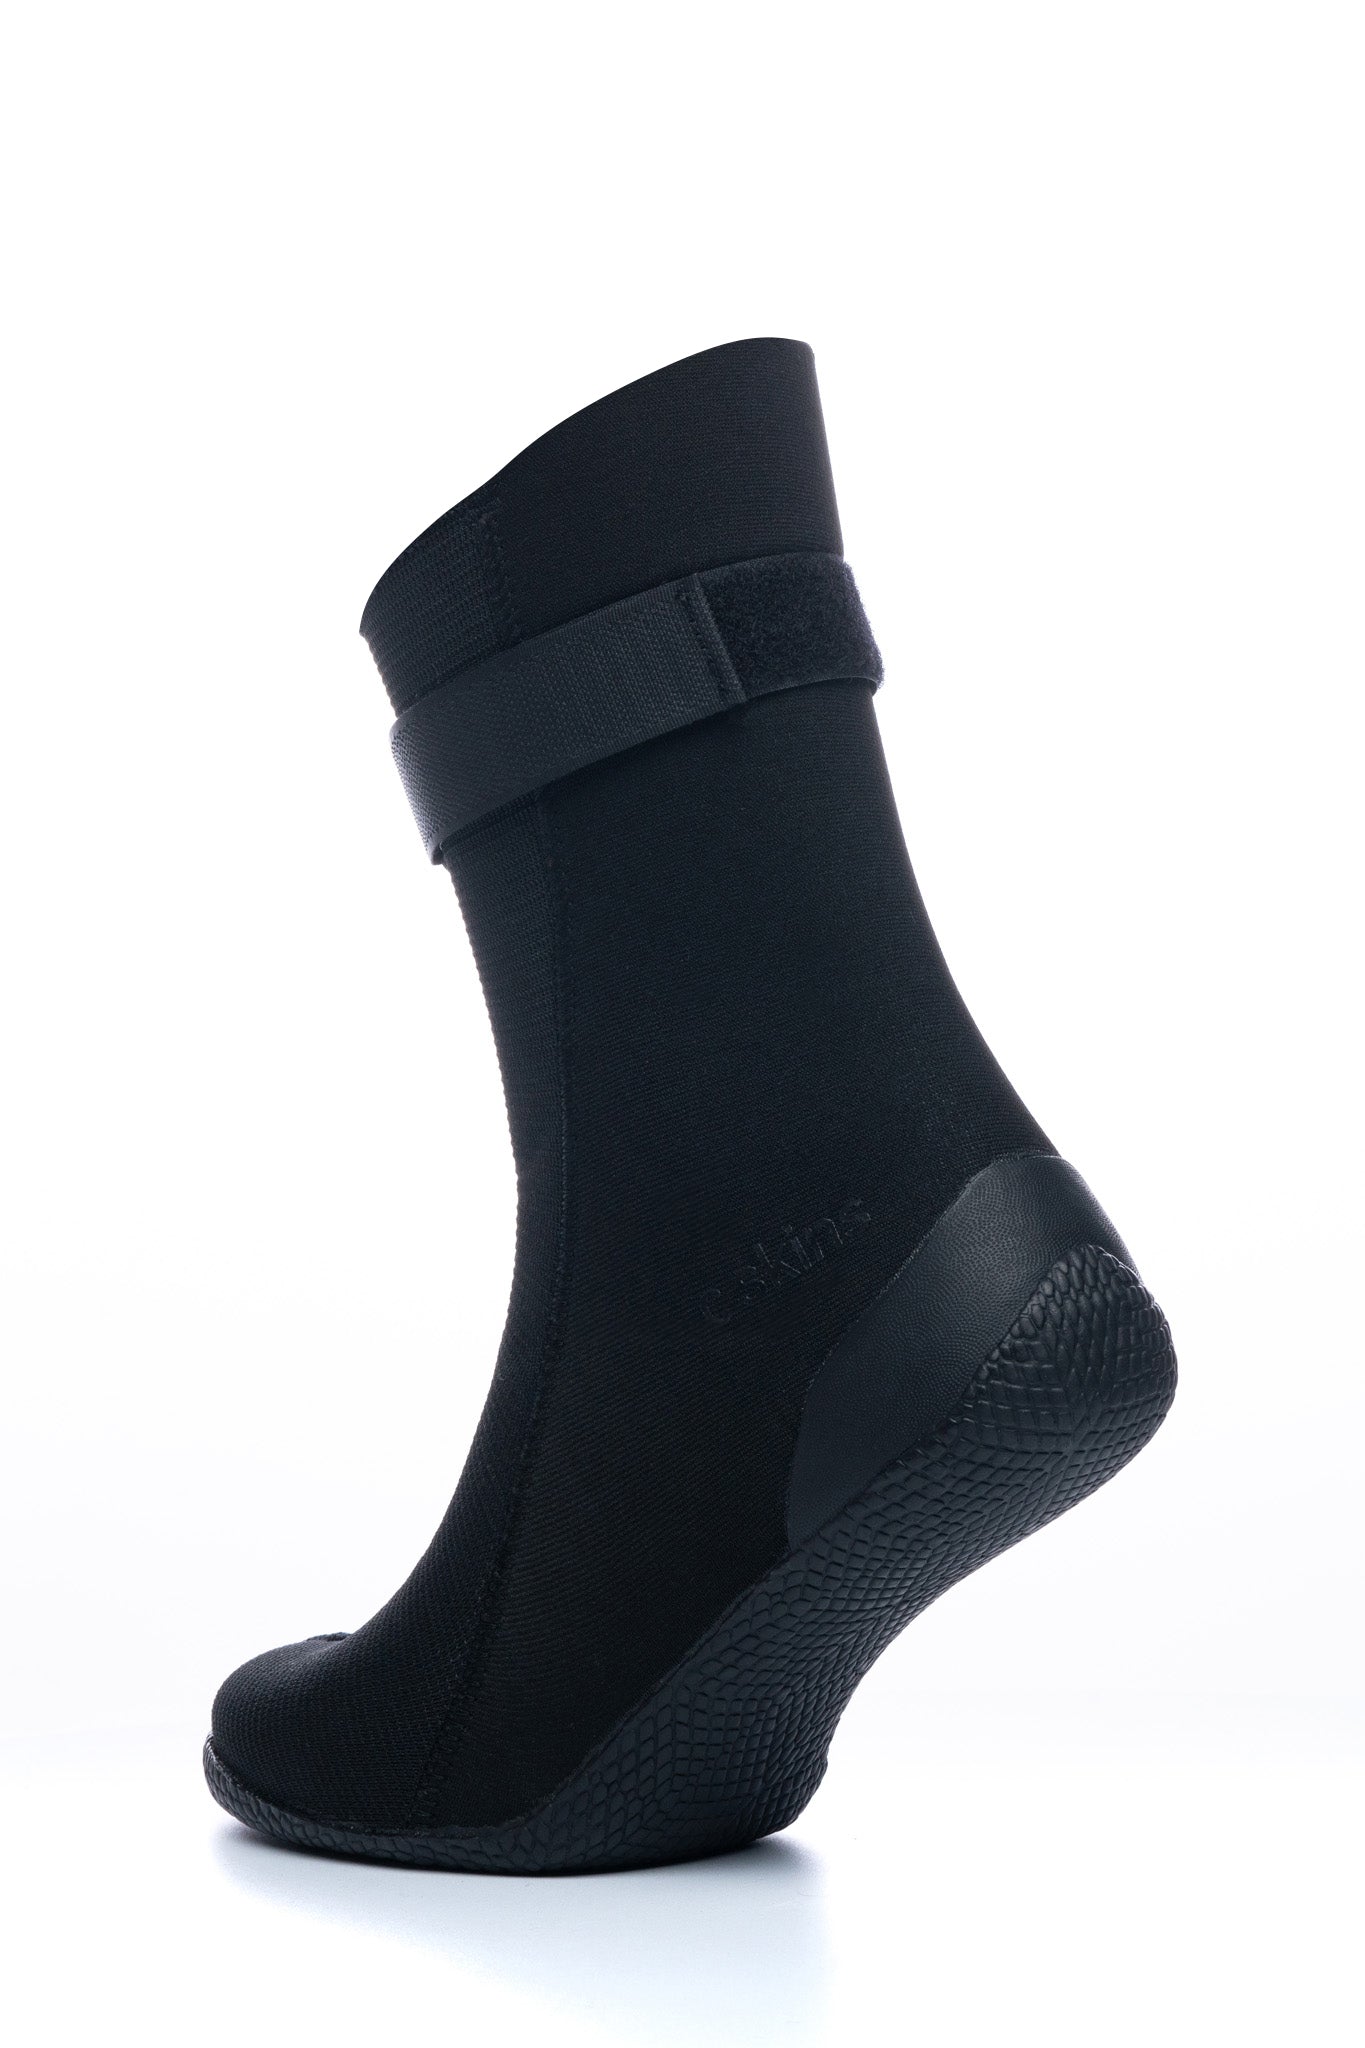 Blackout 3mm Split Toe Boots